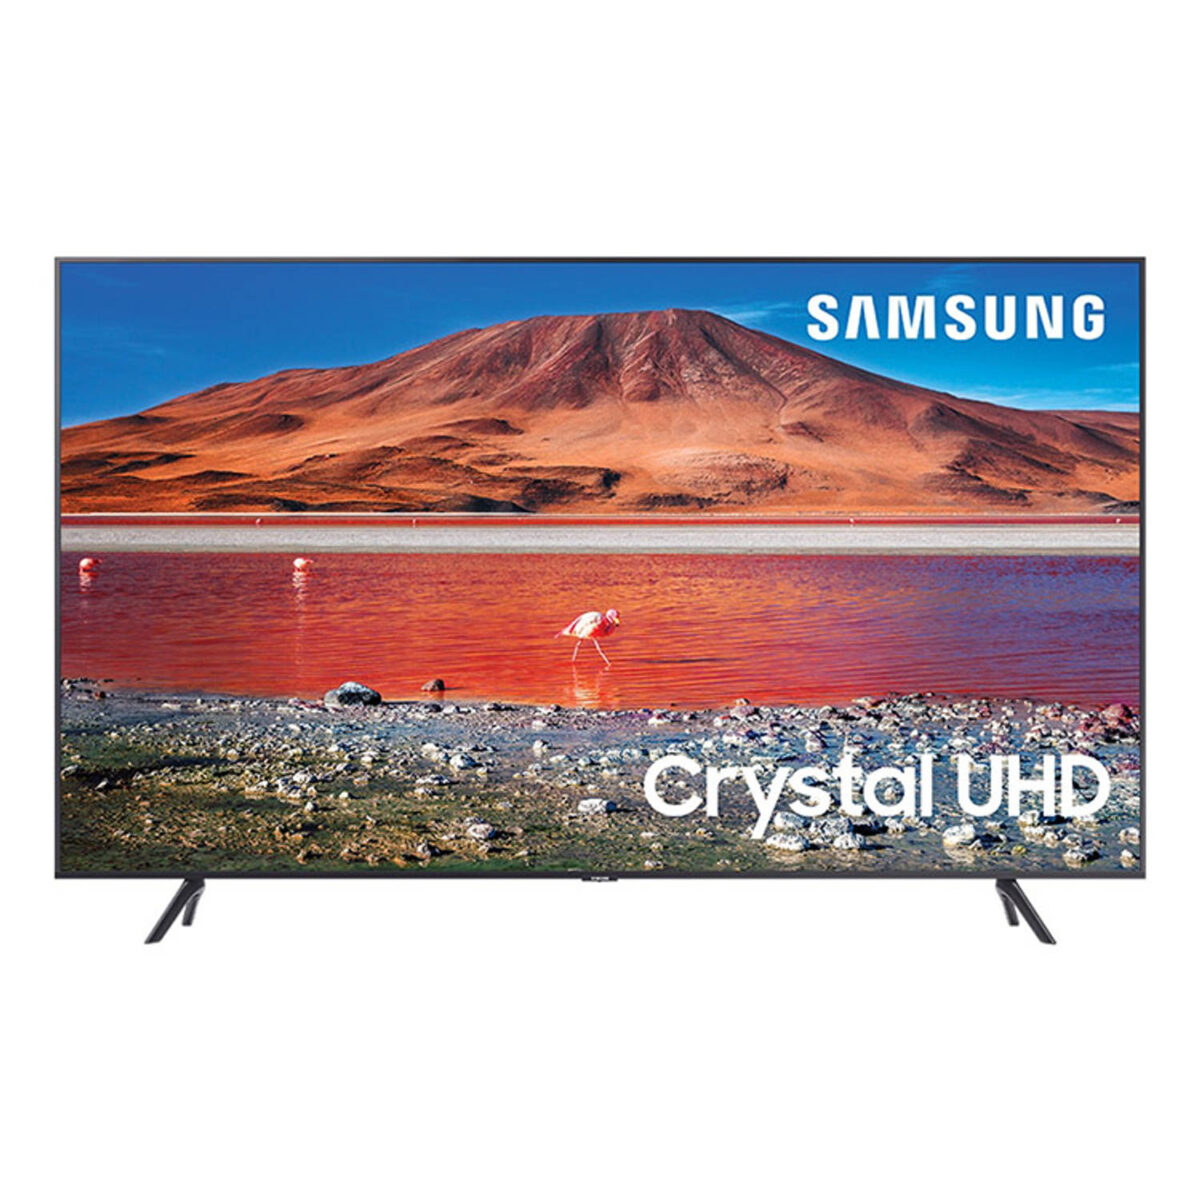 Samsung UE50TU7000 - 4K HDR LED Smart TV (50 inch)